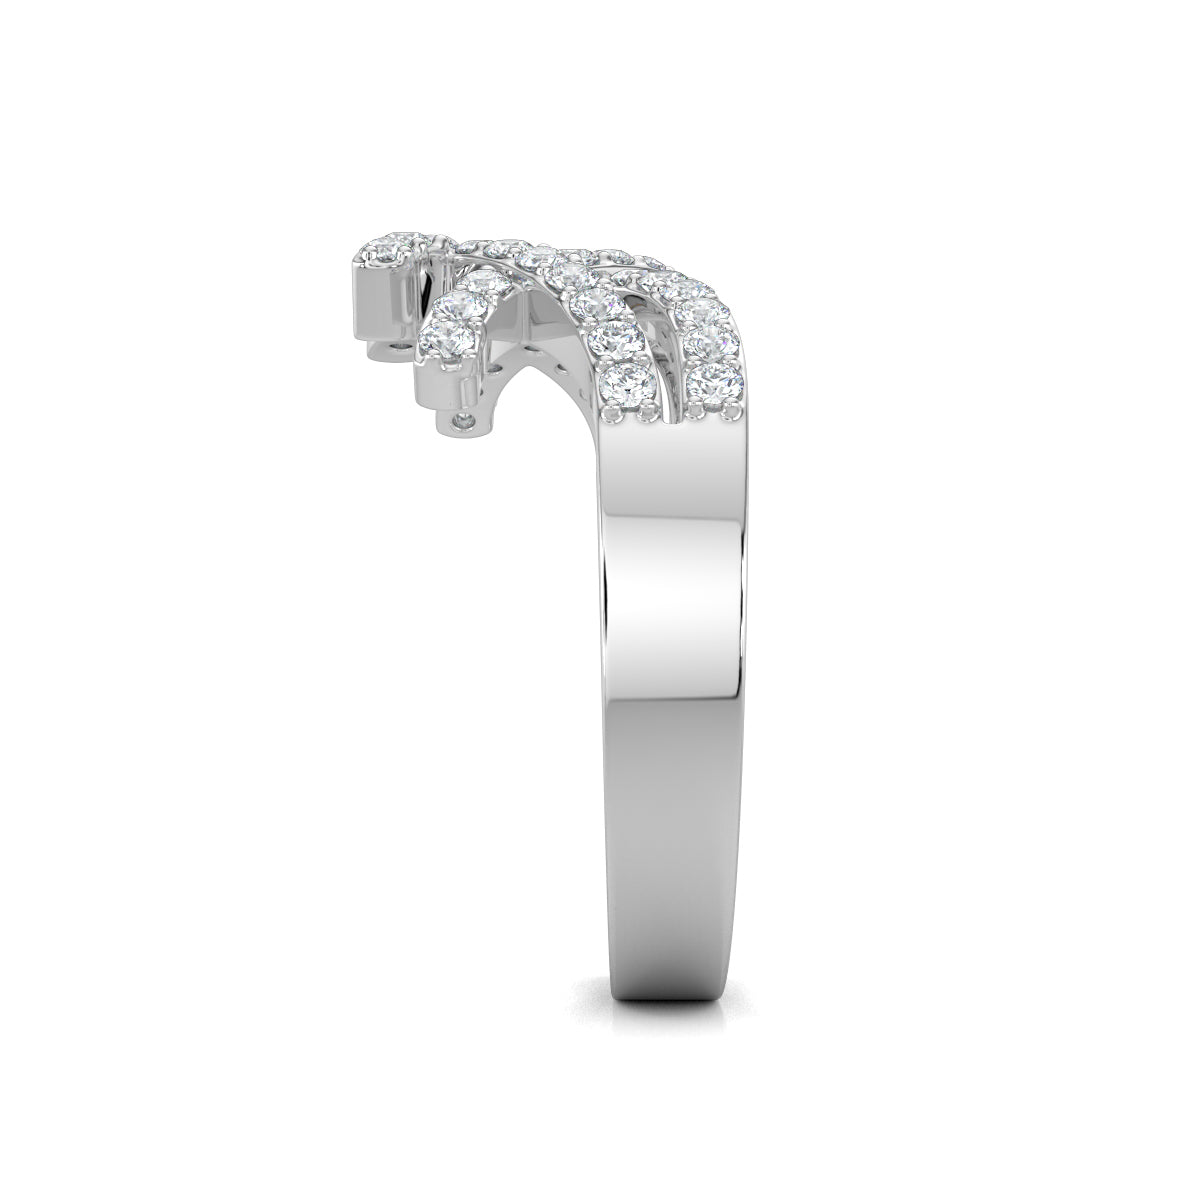 White Gold, Diamond Ring, Diamond ring, Bella Crown Diamond Ring, Italian design ring, Everyday diamond ring, Natural diamond ring, Lab-grown diamond ring, Split shank diamond ring, Crown-inspired ring, Diamond-studded ring